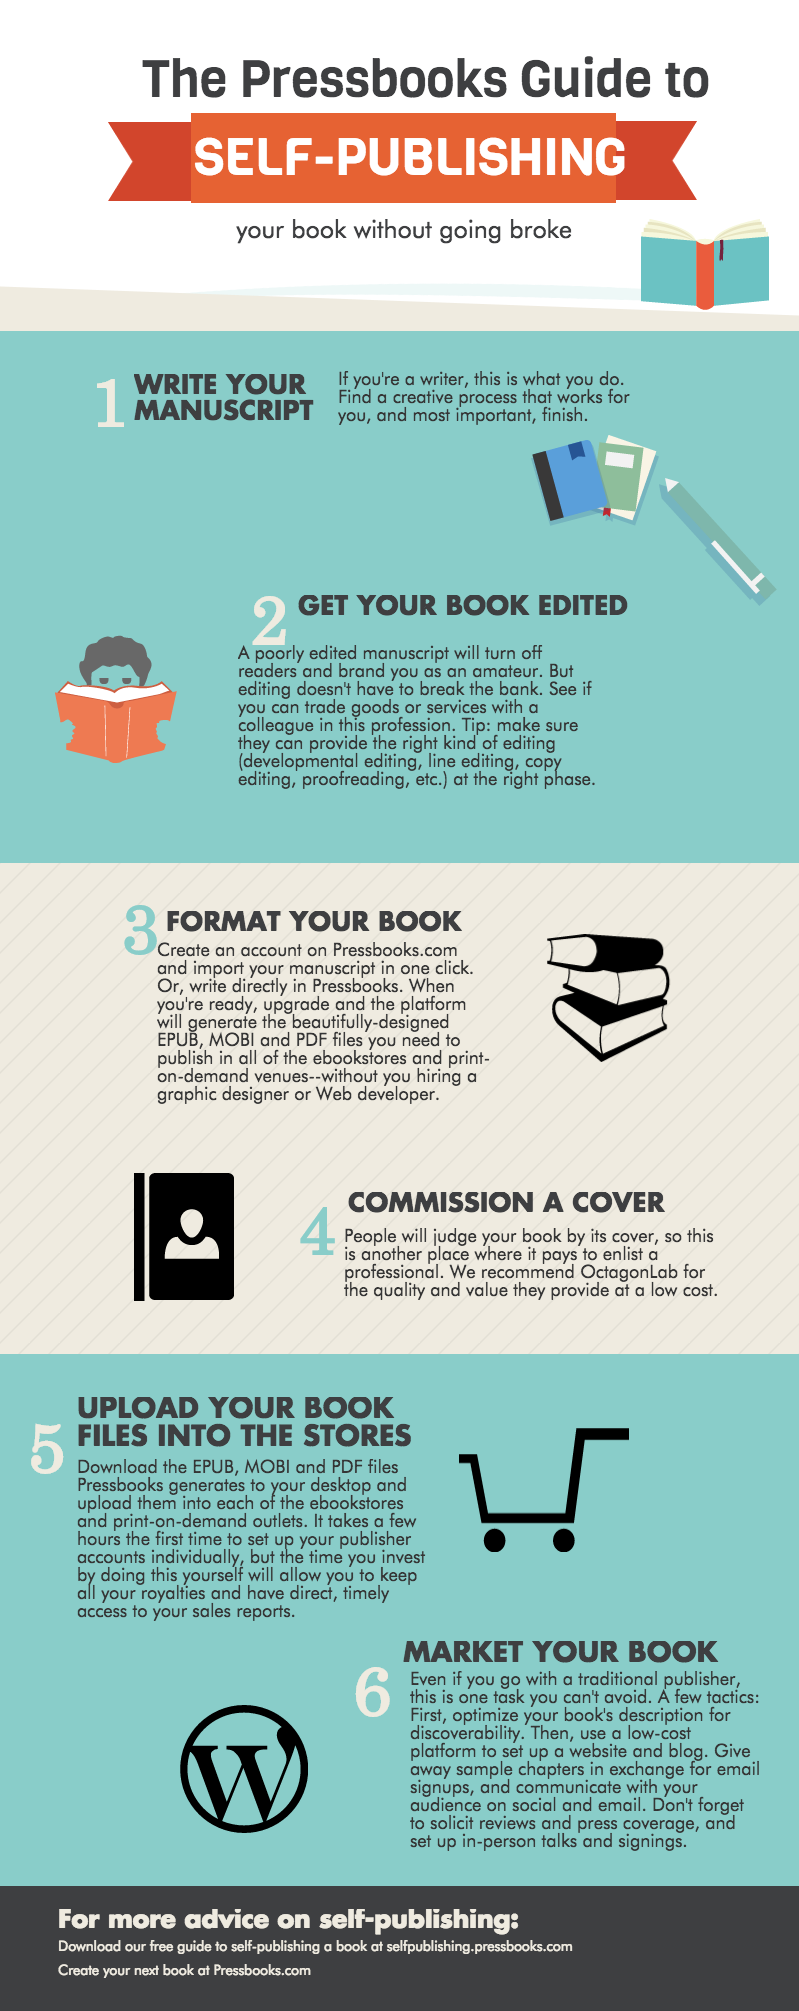 Pressbooks Guide to Self-Publishing